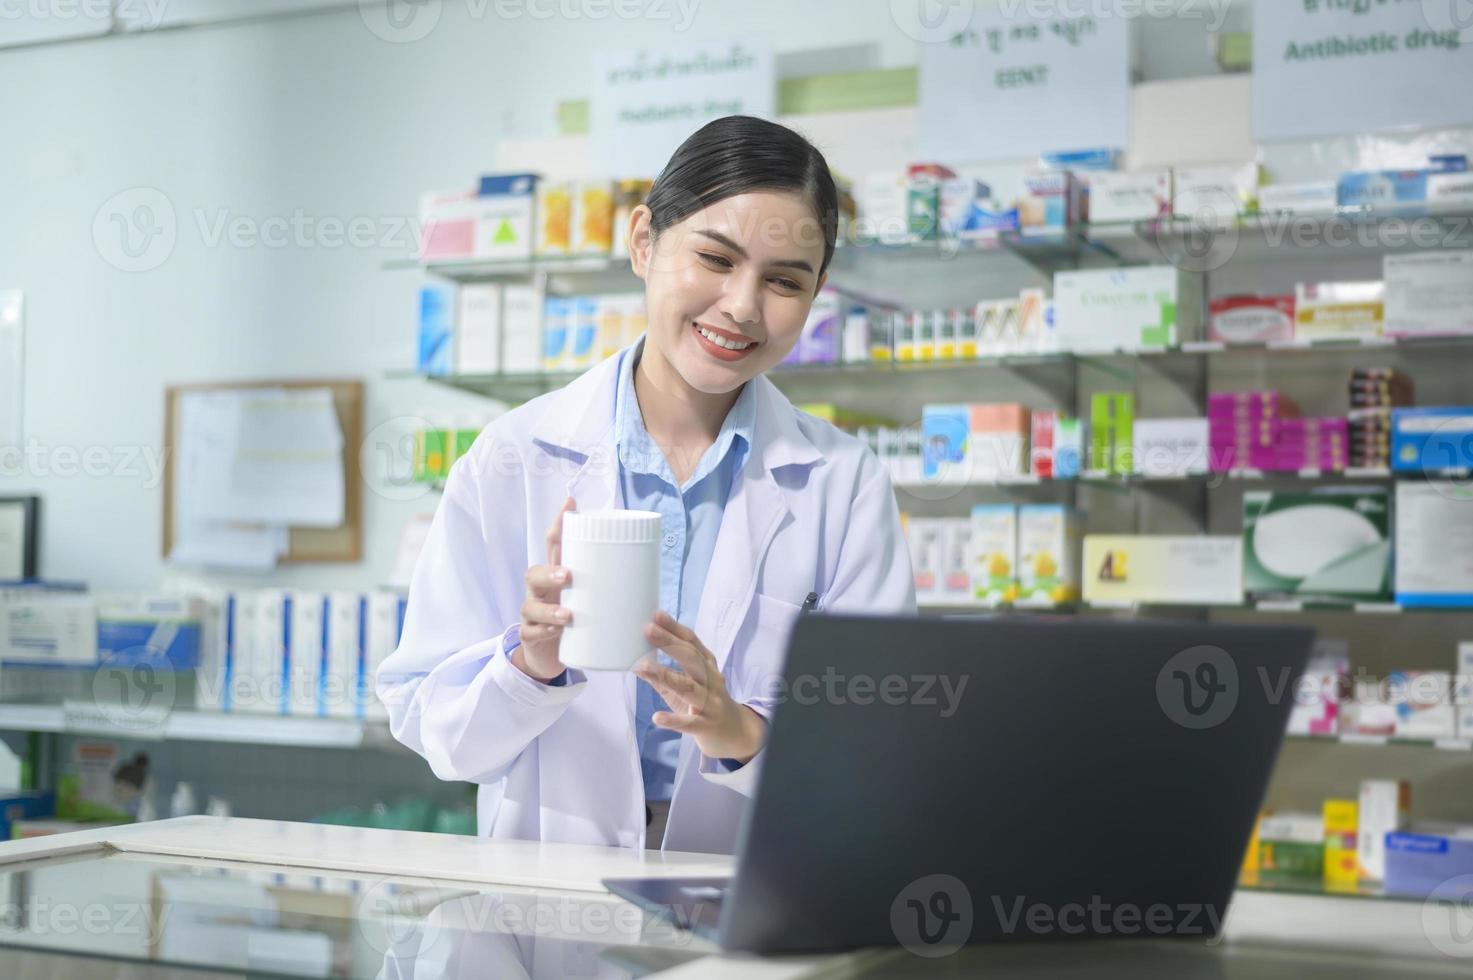 Female pharmacist counseling customer via video call in a modern pharmacy drugstore. photo